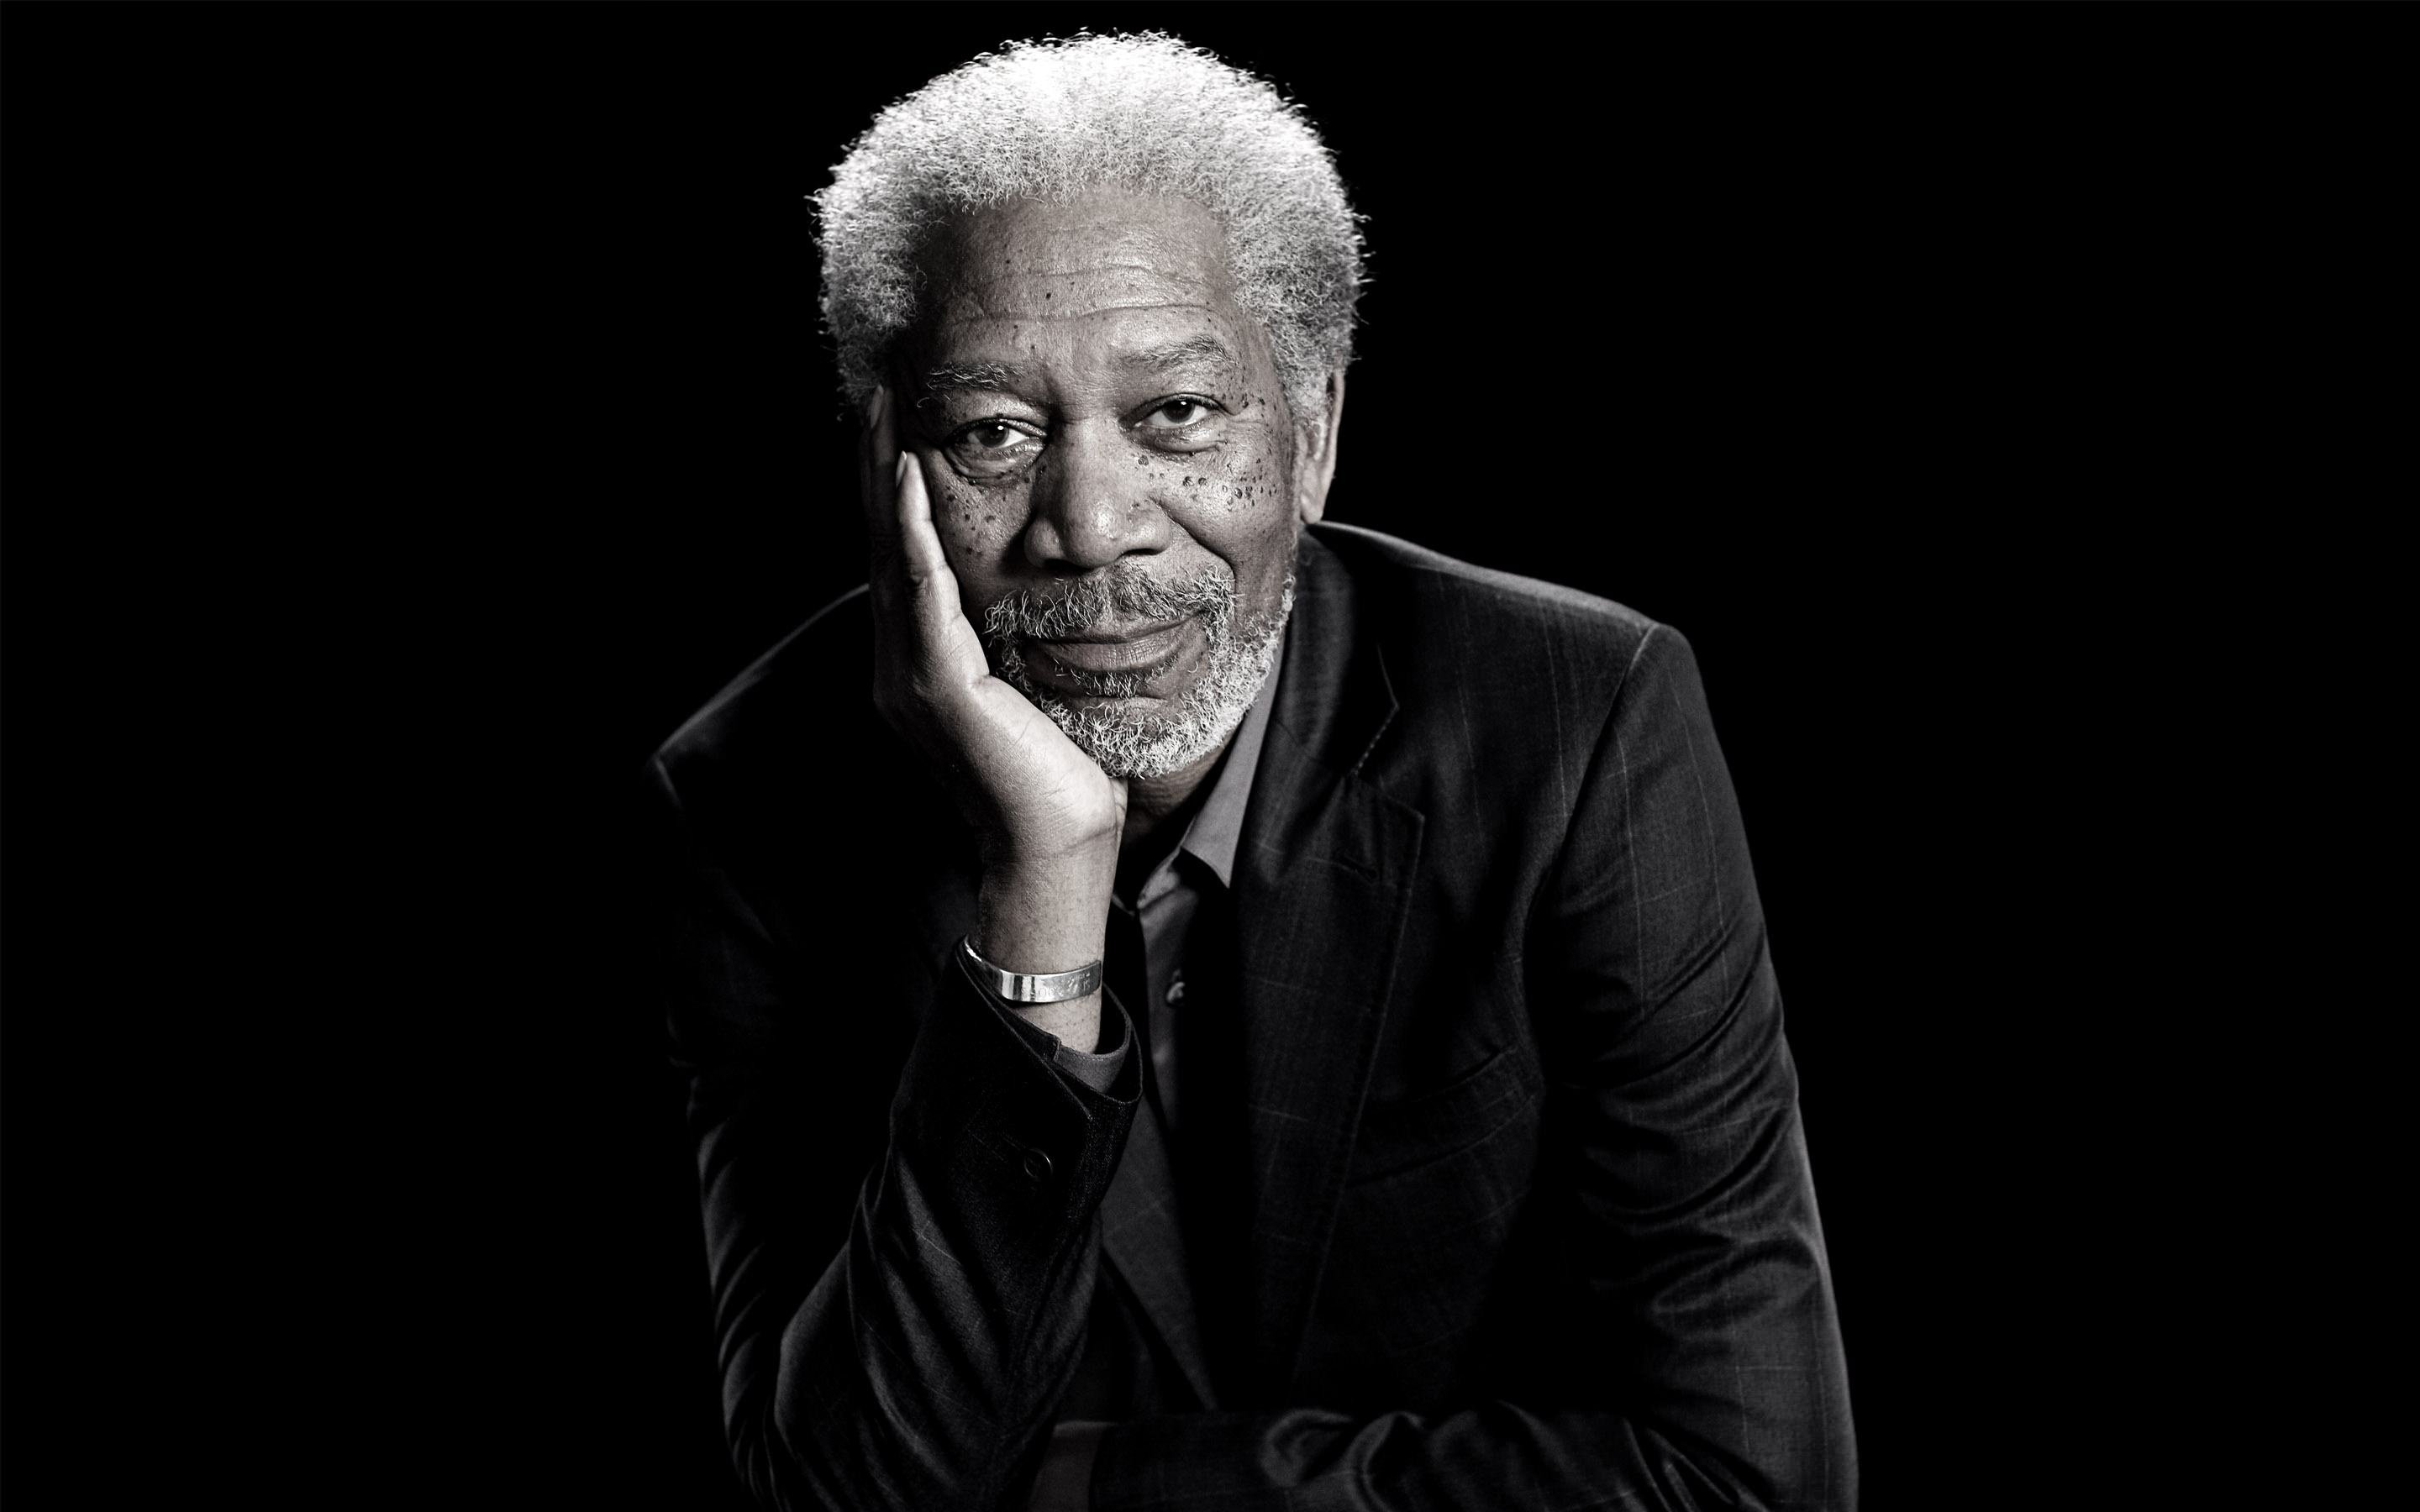 Morgan Freeman Portrait Wallpaper for Desktop 2880x1800